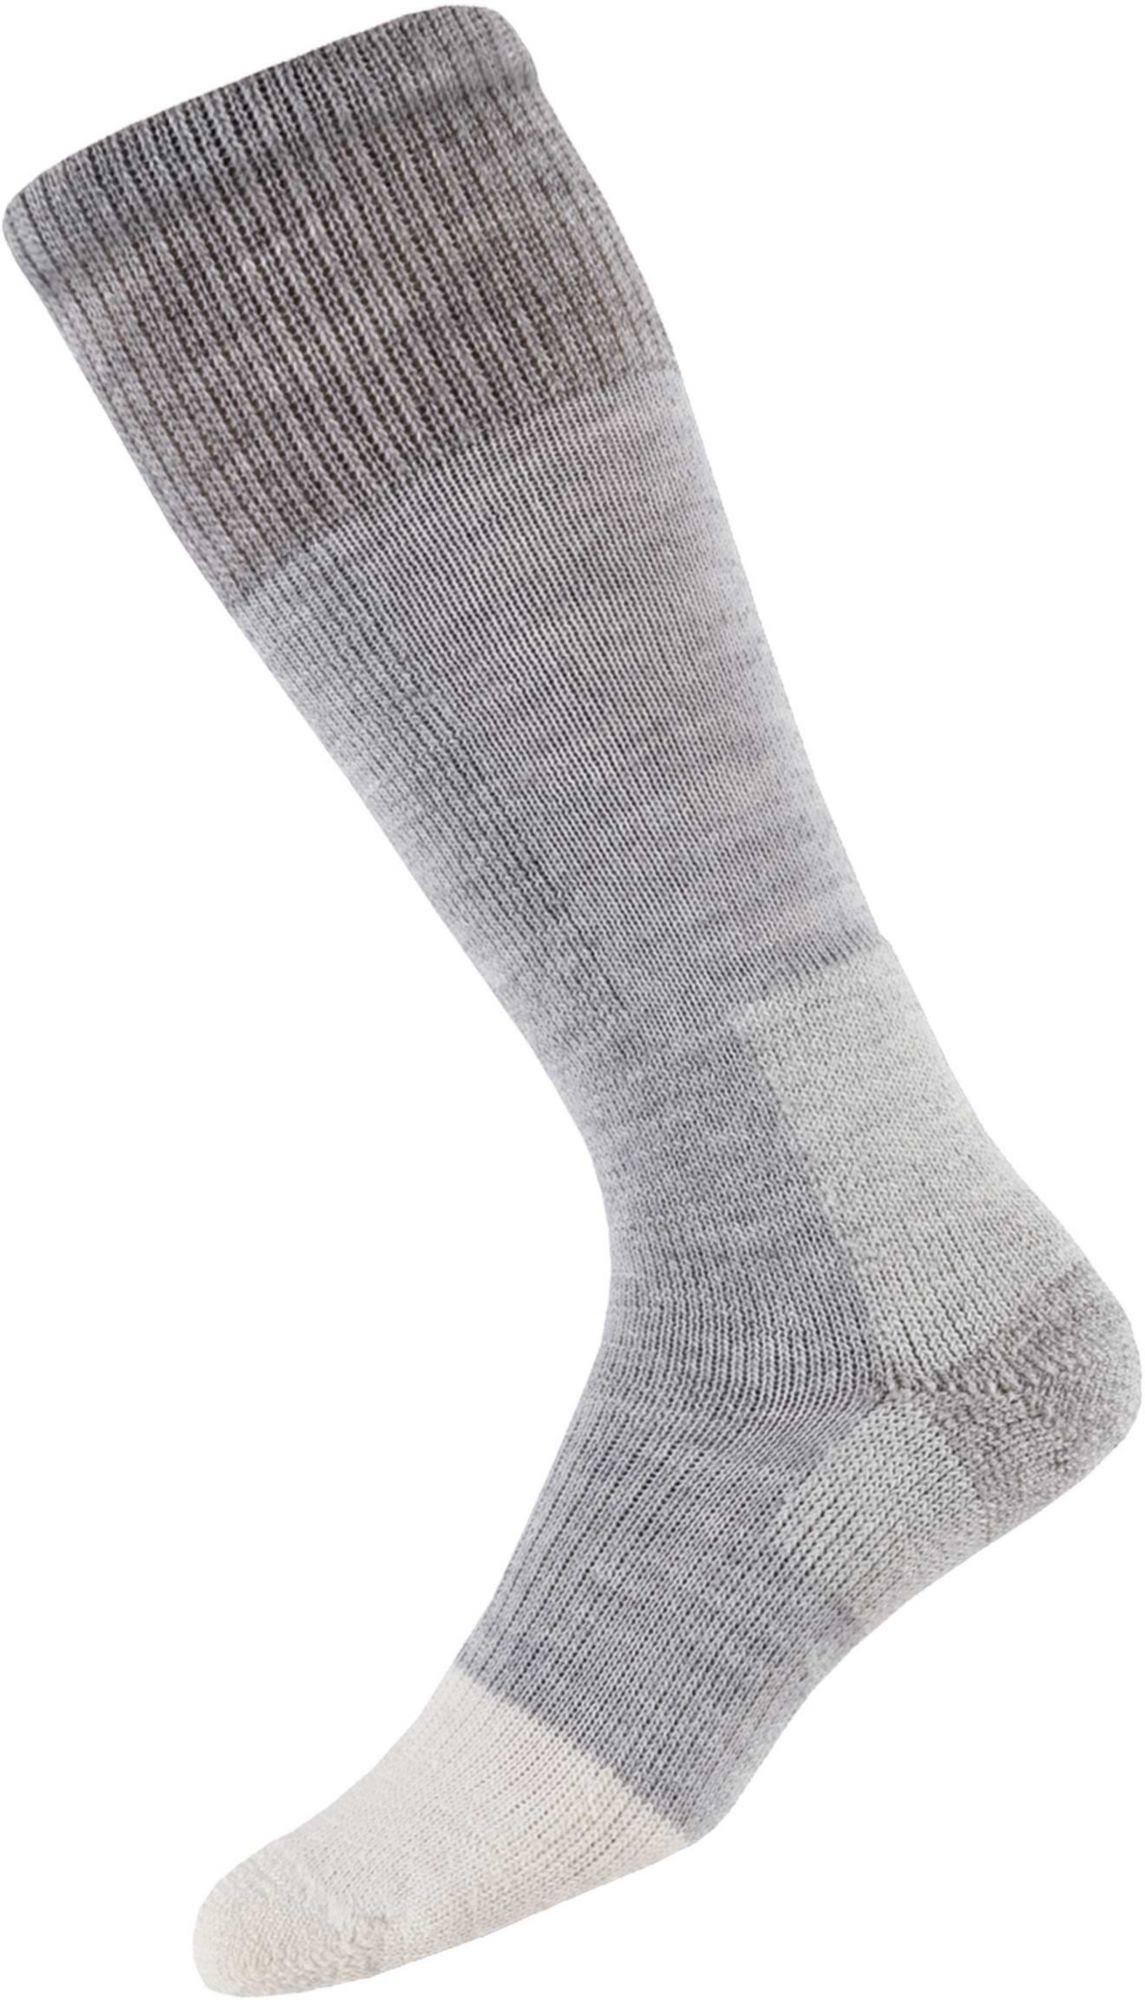 Thorlos Extreme Cold Over Calf Socks, Light Gray